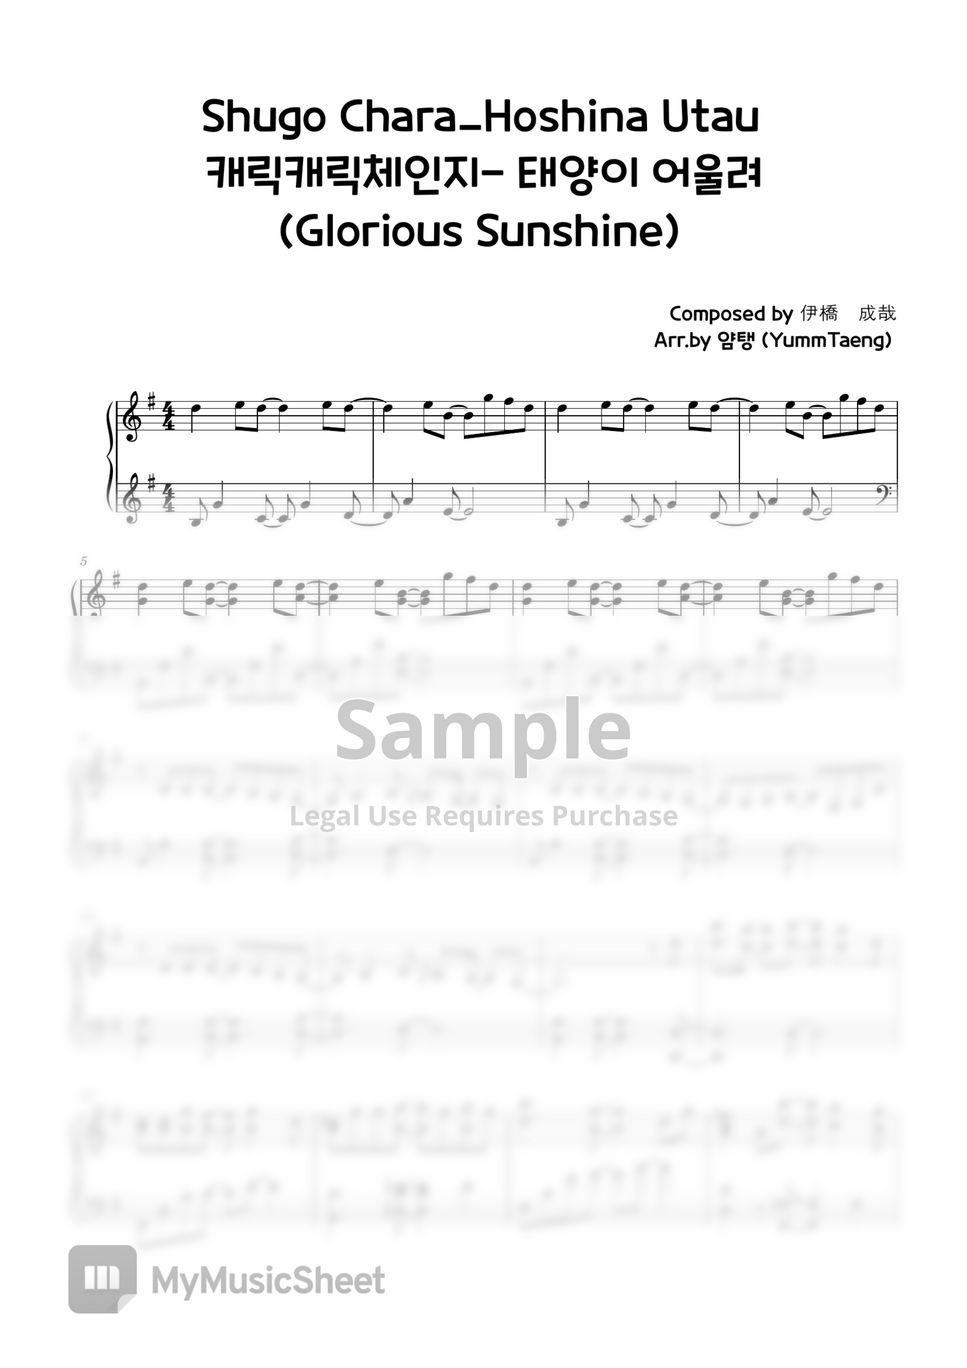 Shugo Chara! - Glorious Sunshine by YummTaeng